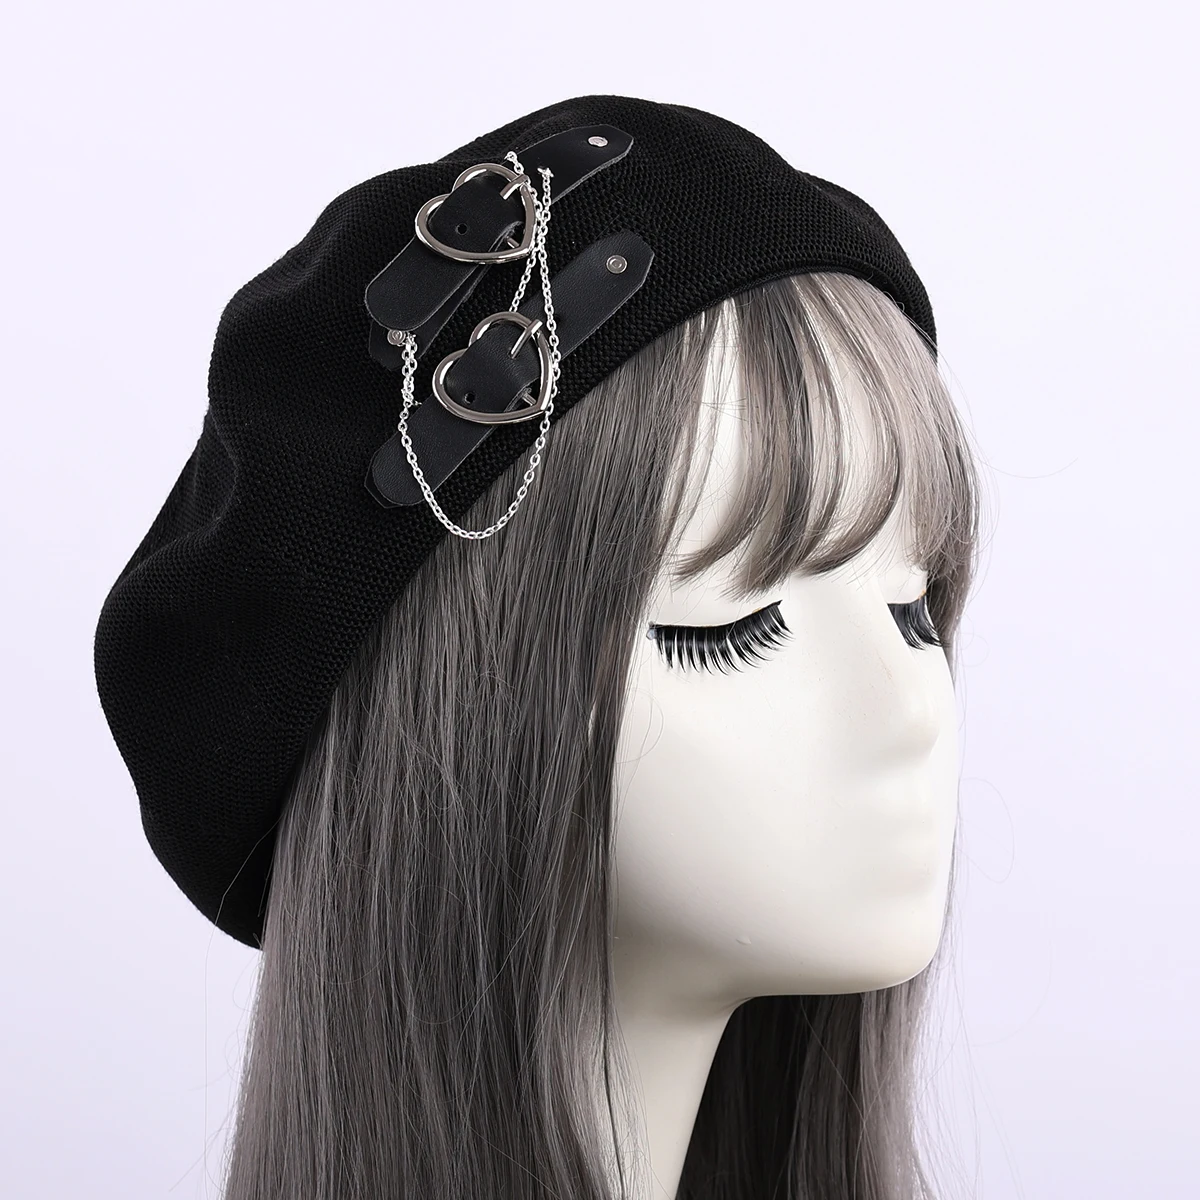  - Girl Punk Beret Hat Goth Preppy Style Women Hair Accessories Fashion Beanie JK Hat Summer Breathable Gothic Lolita Hats Cap